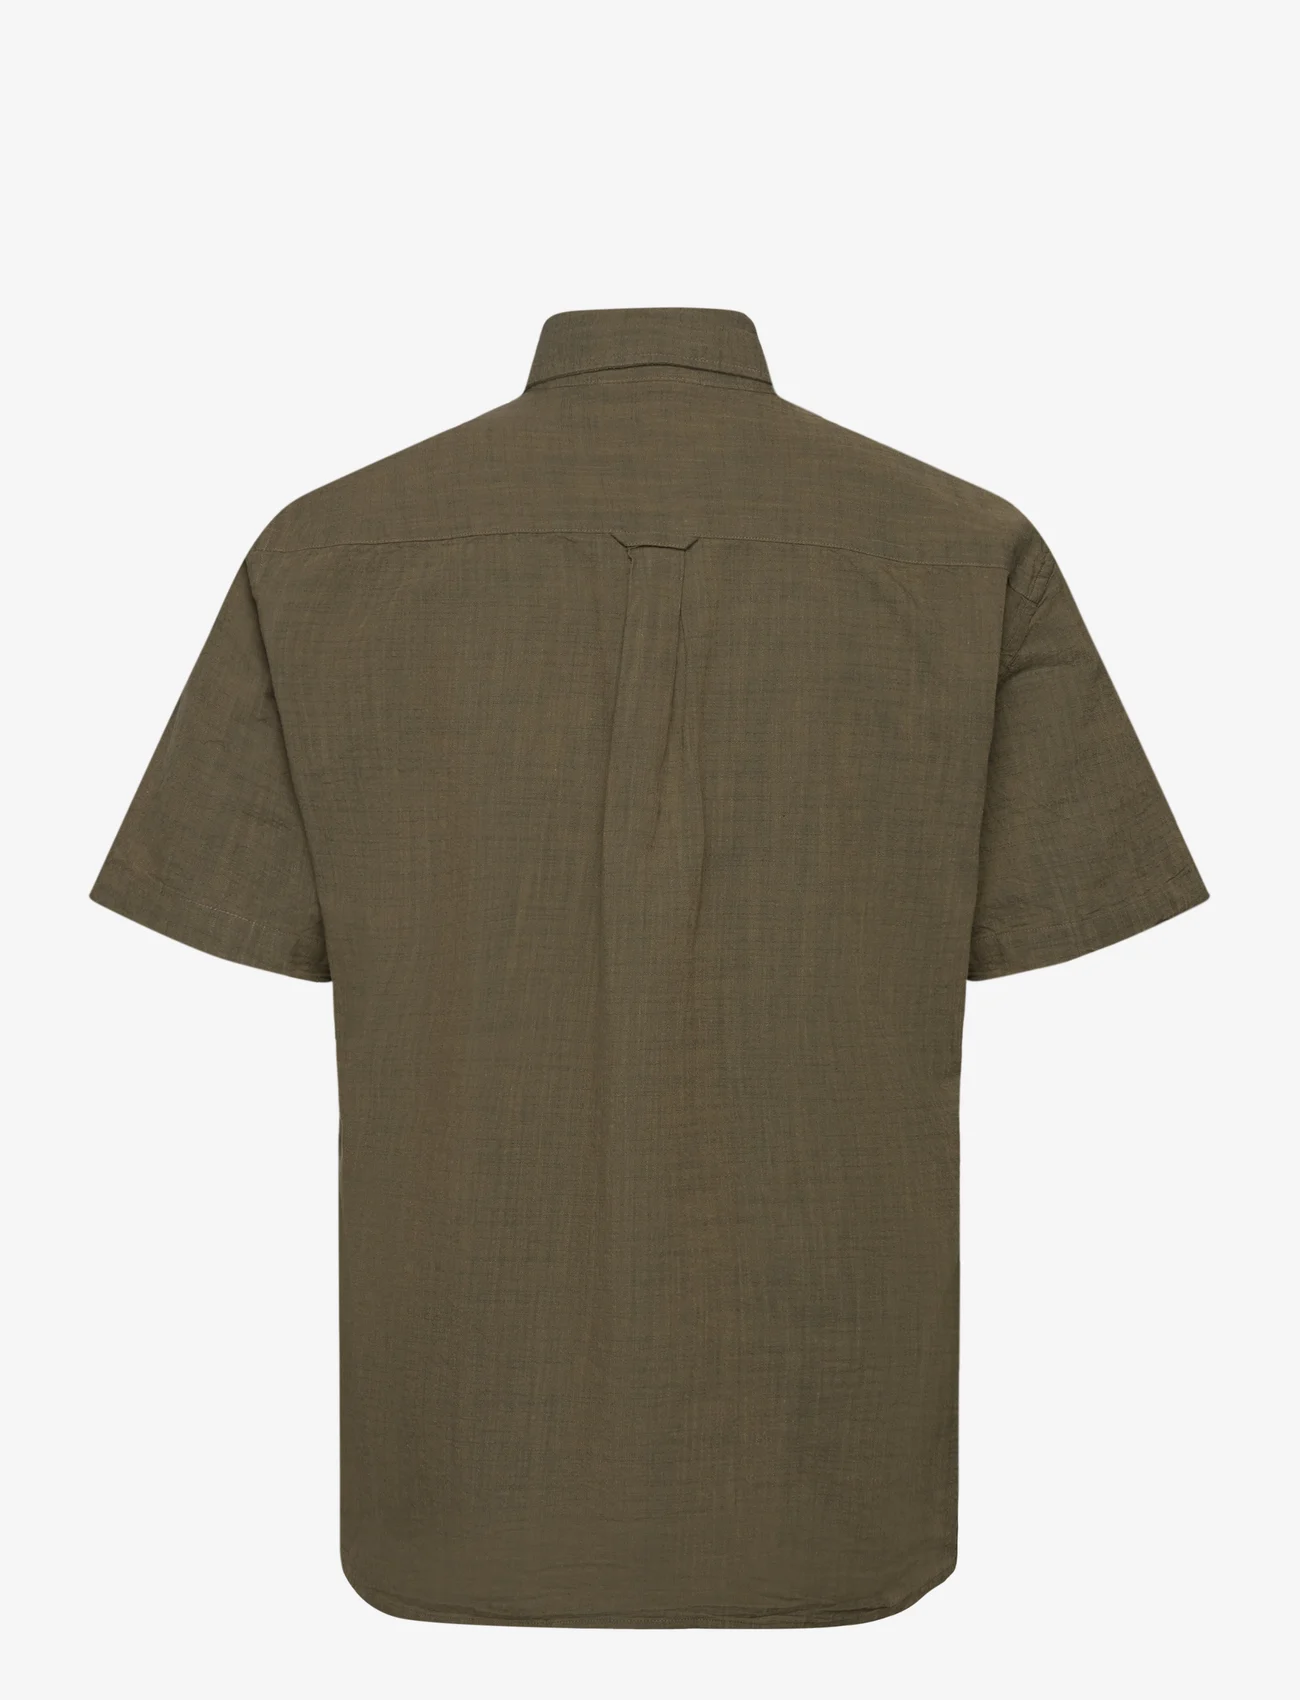 Knowledge Cotton Apparel - Regular linen look short sleeve shi - kortärmade t-shirts - burned olive - 1